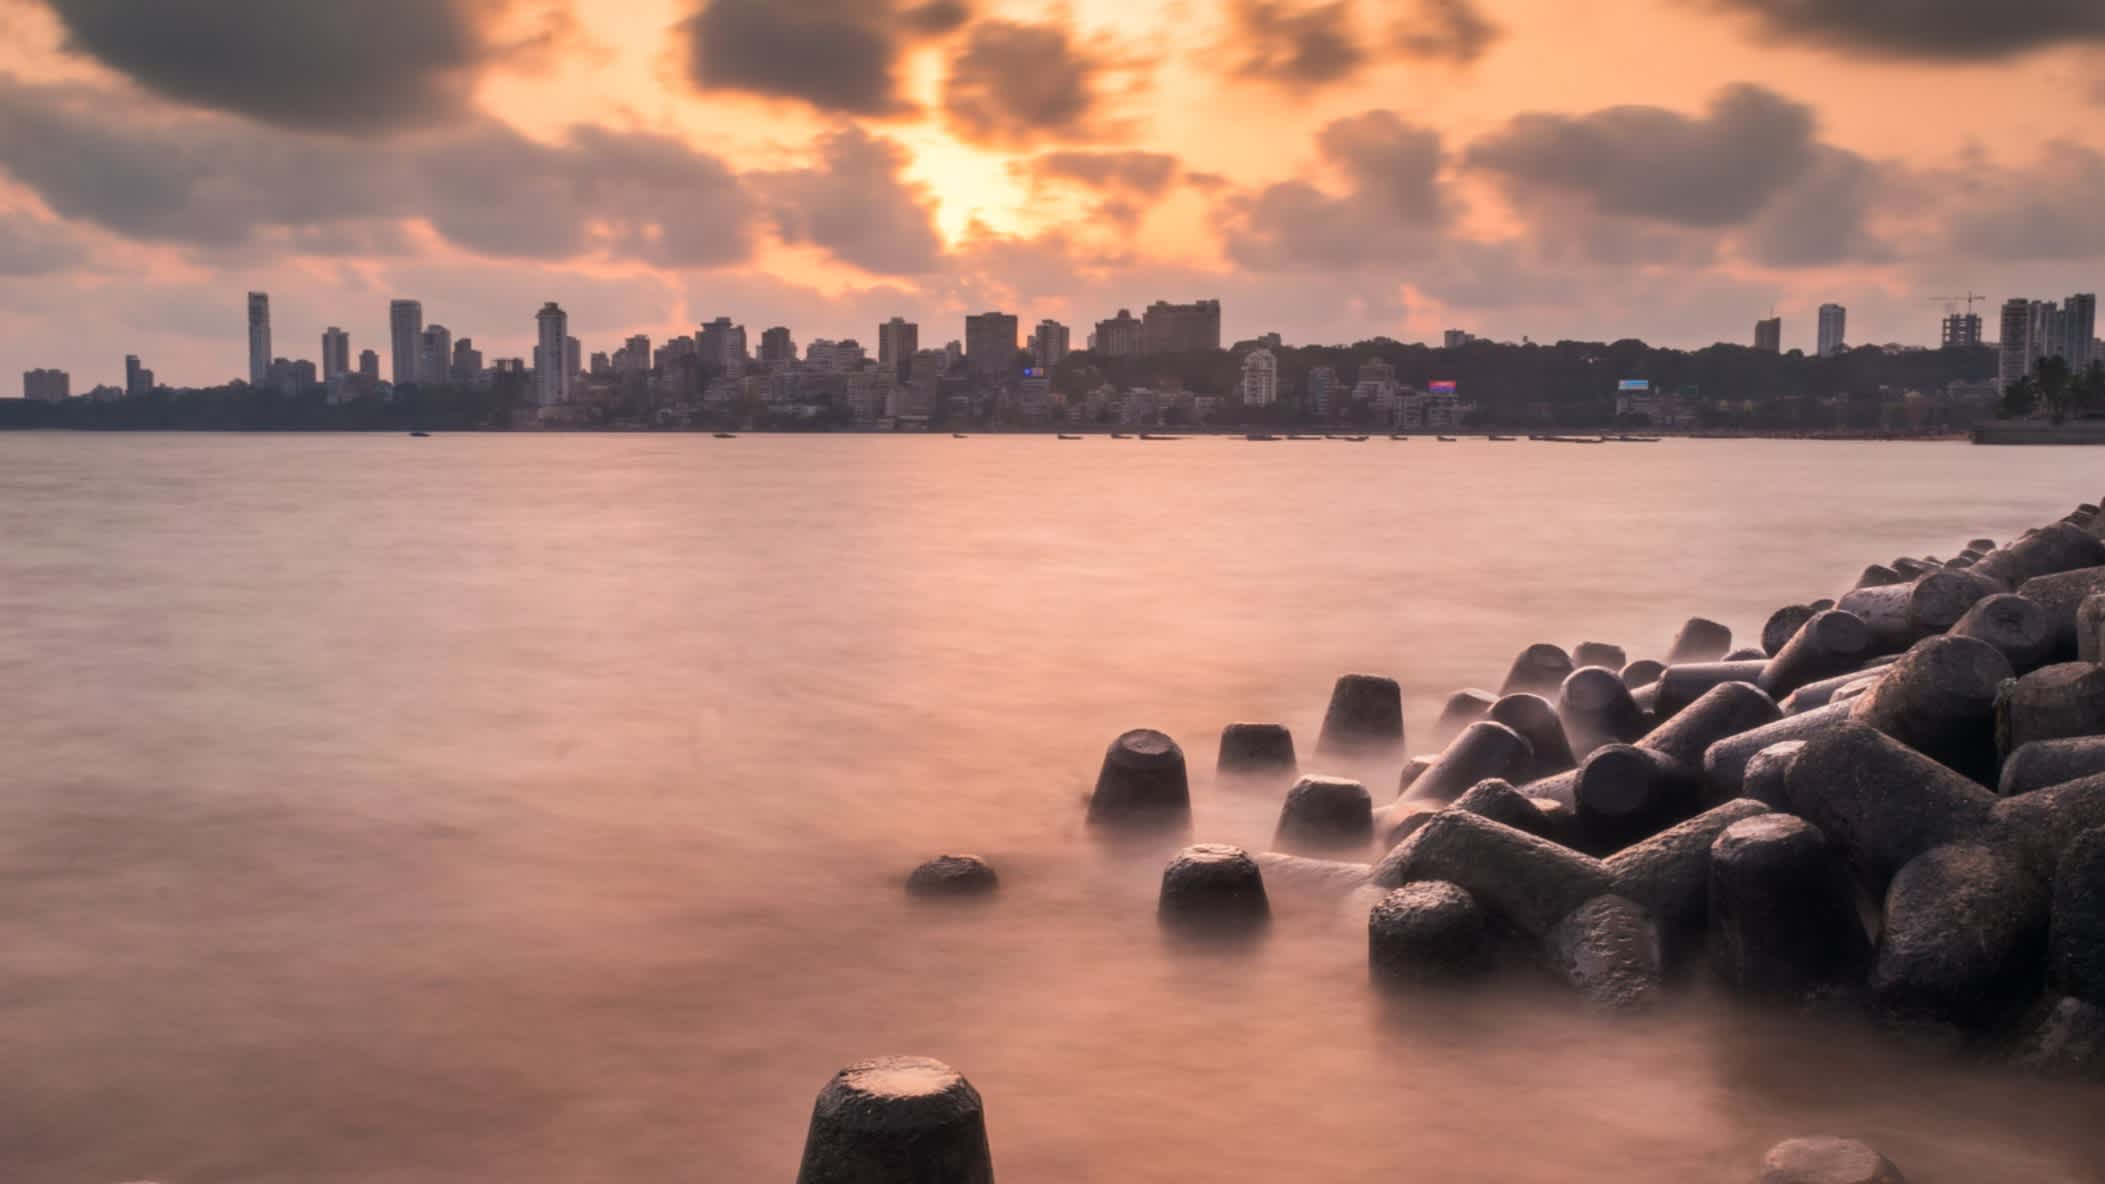 Sonnenuntergang am Marine Drive, Mumbai, Indien

